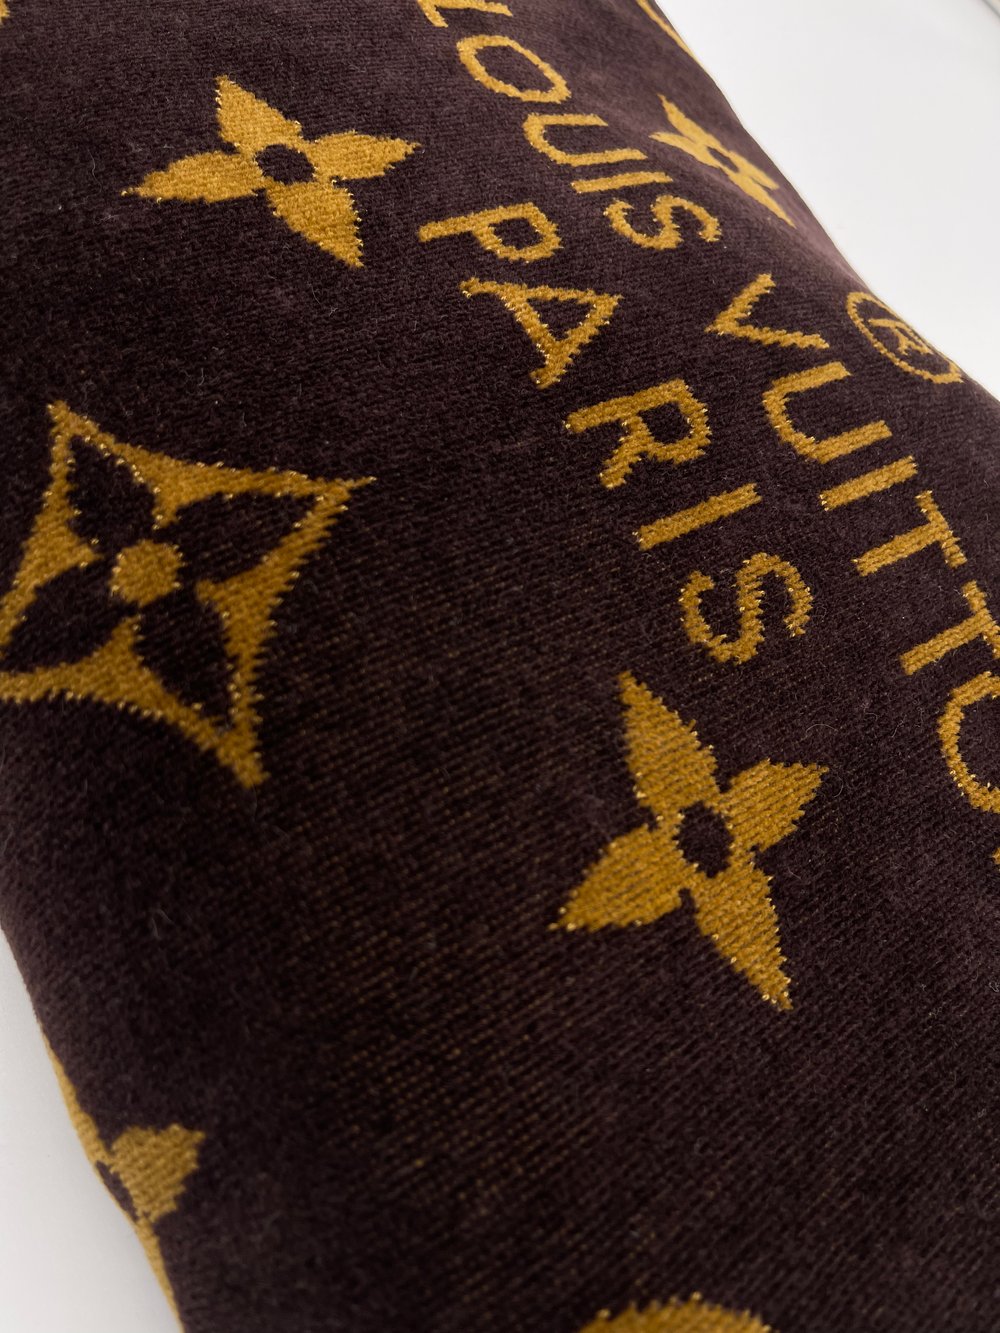 Louis Vuitton Brown Monogram Towel